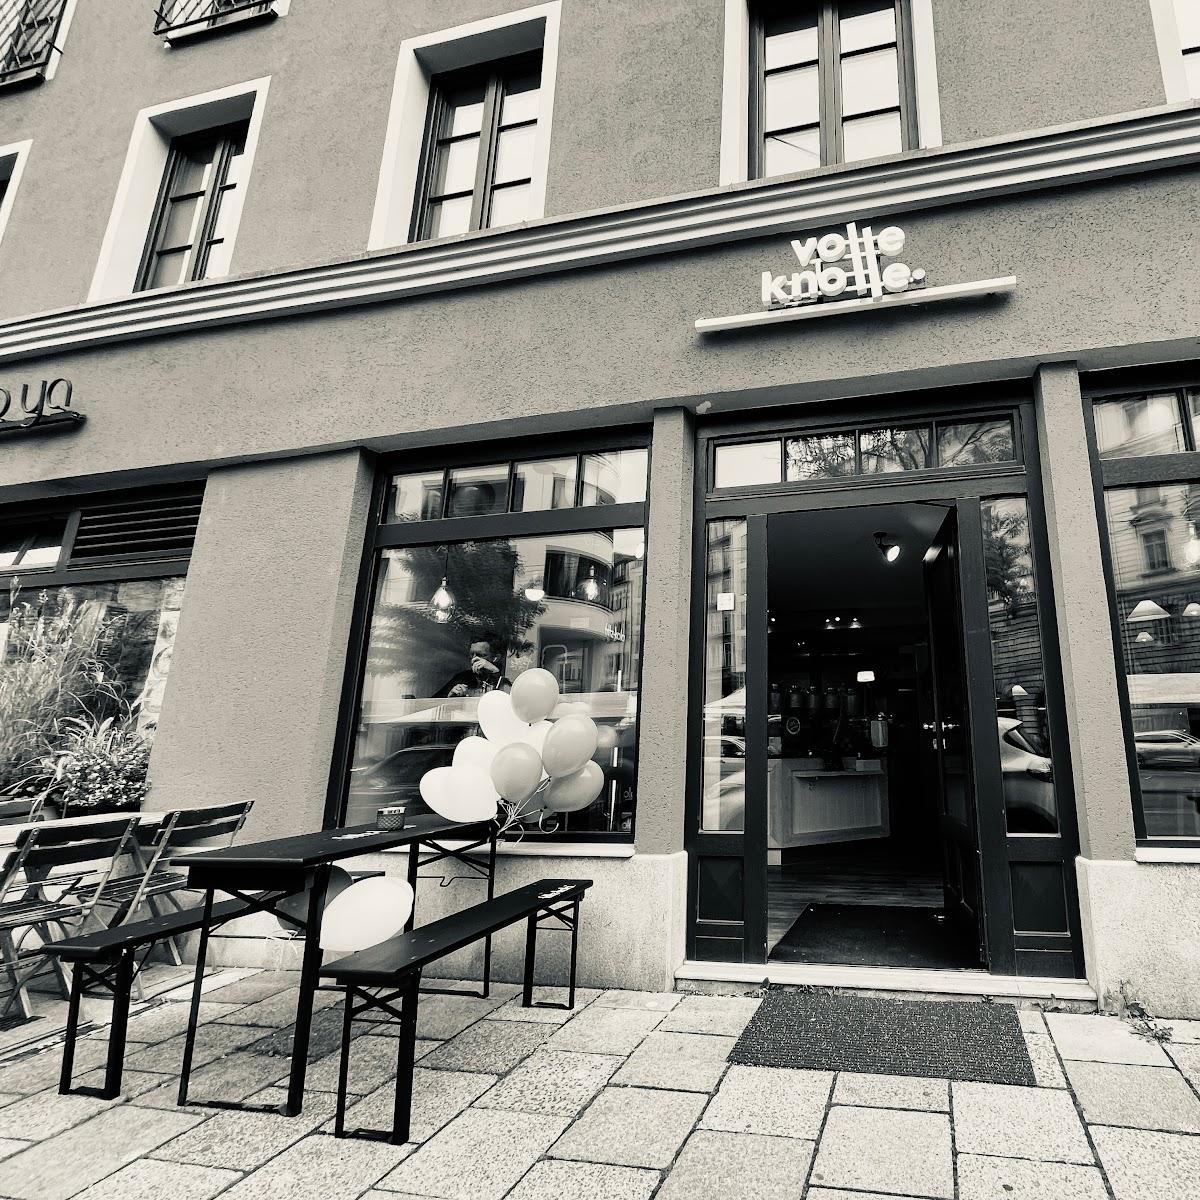 Restaurant "volle knolle." in München